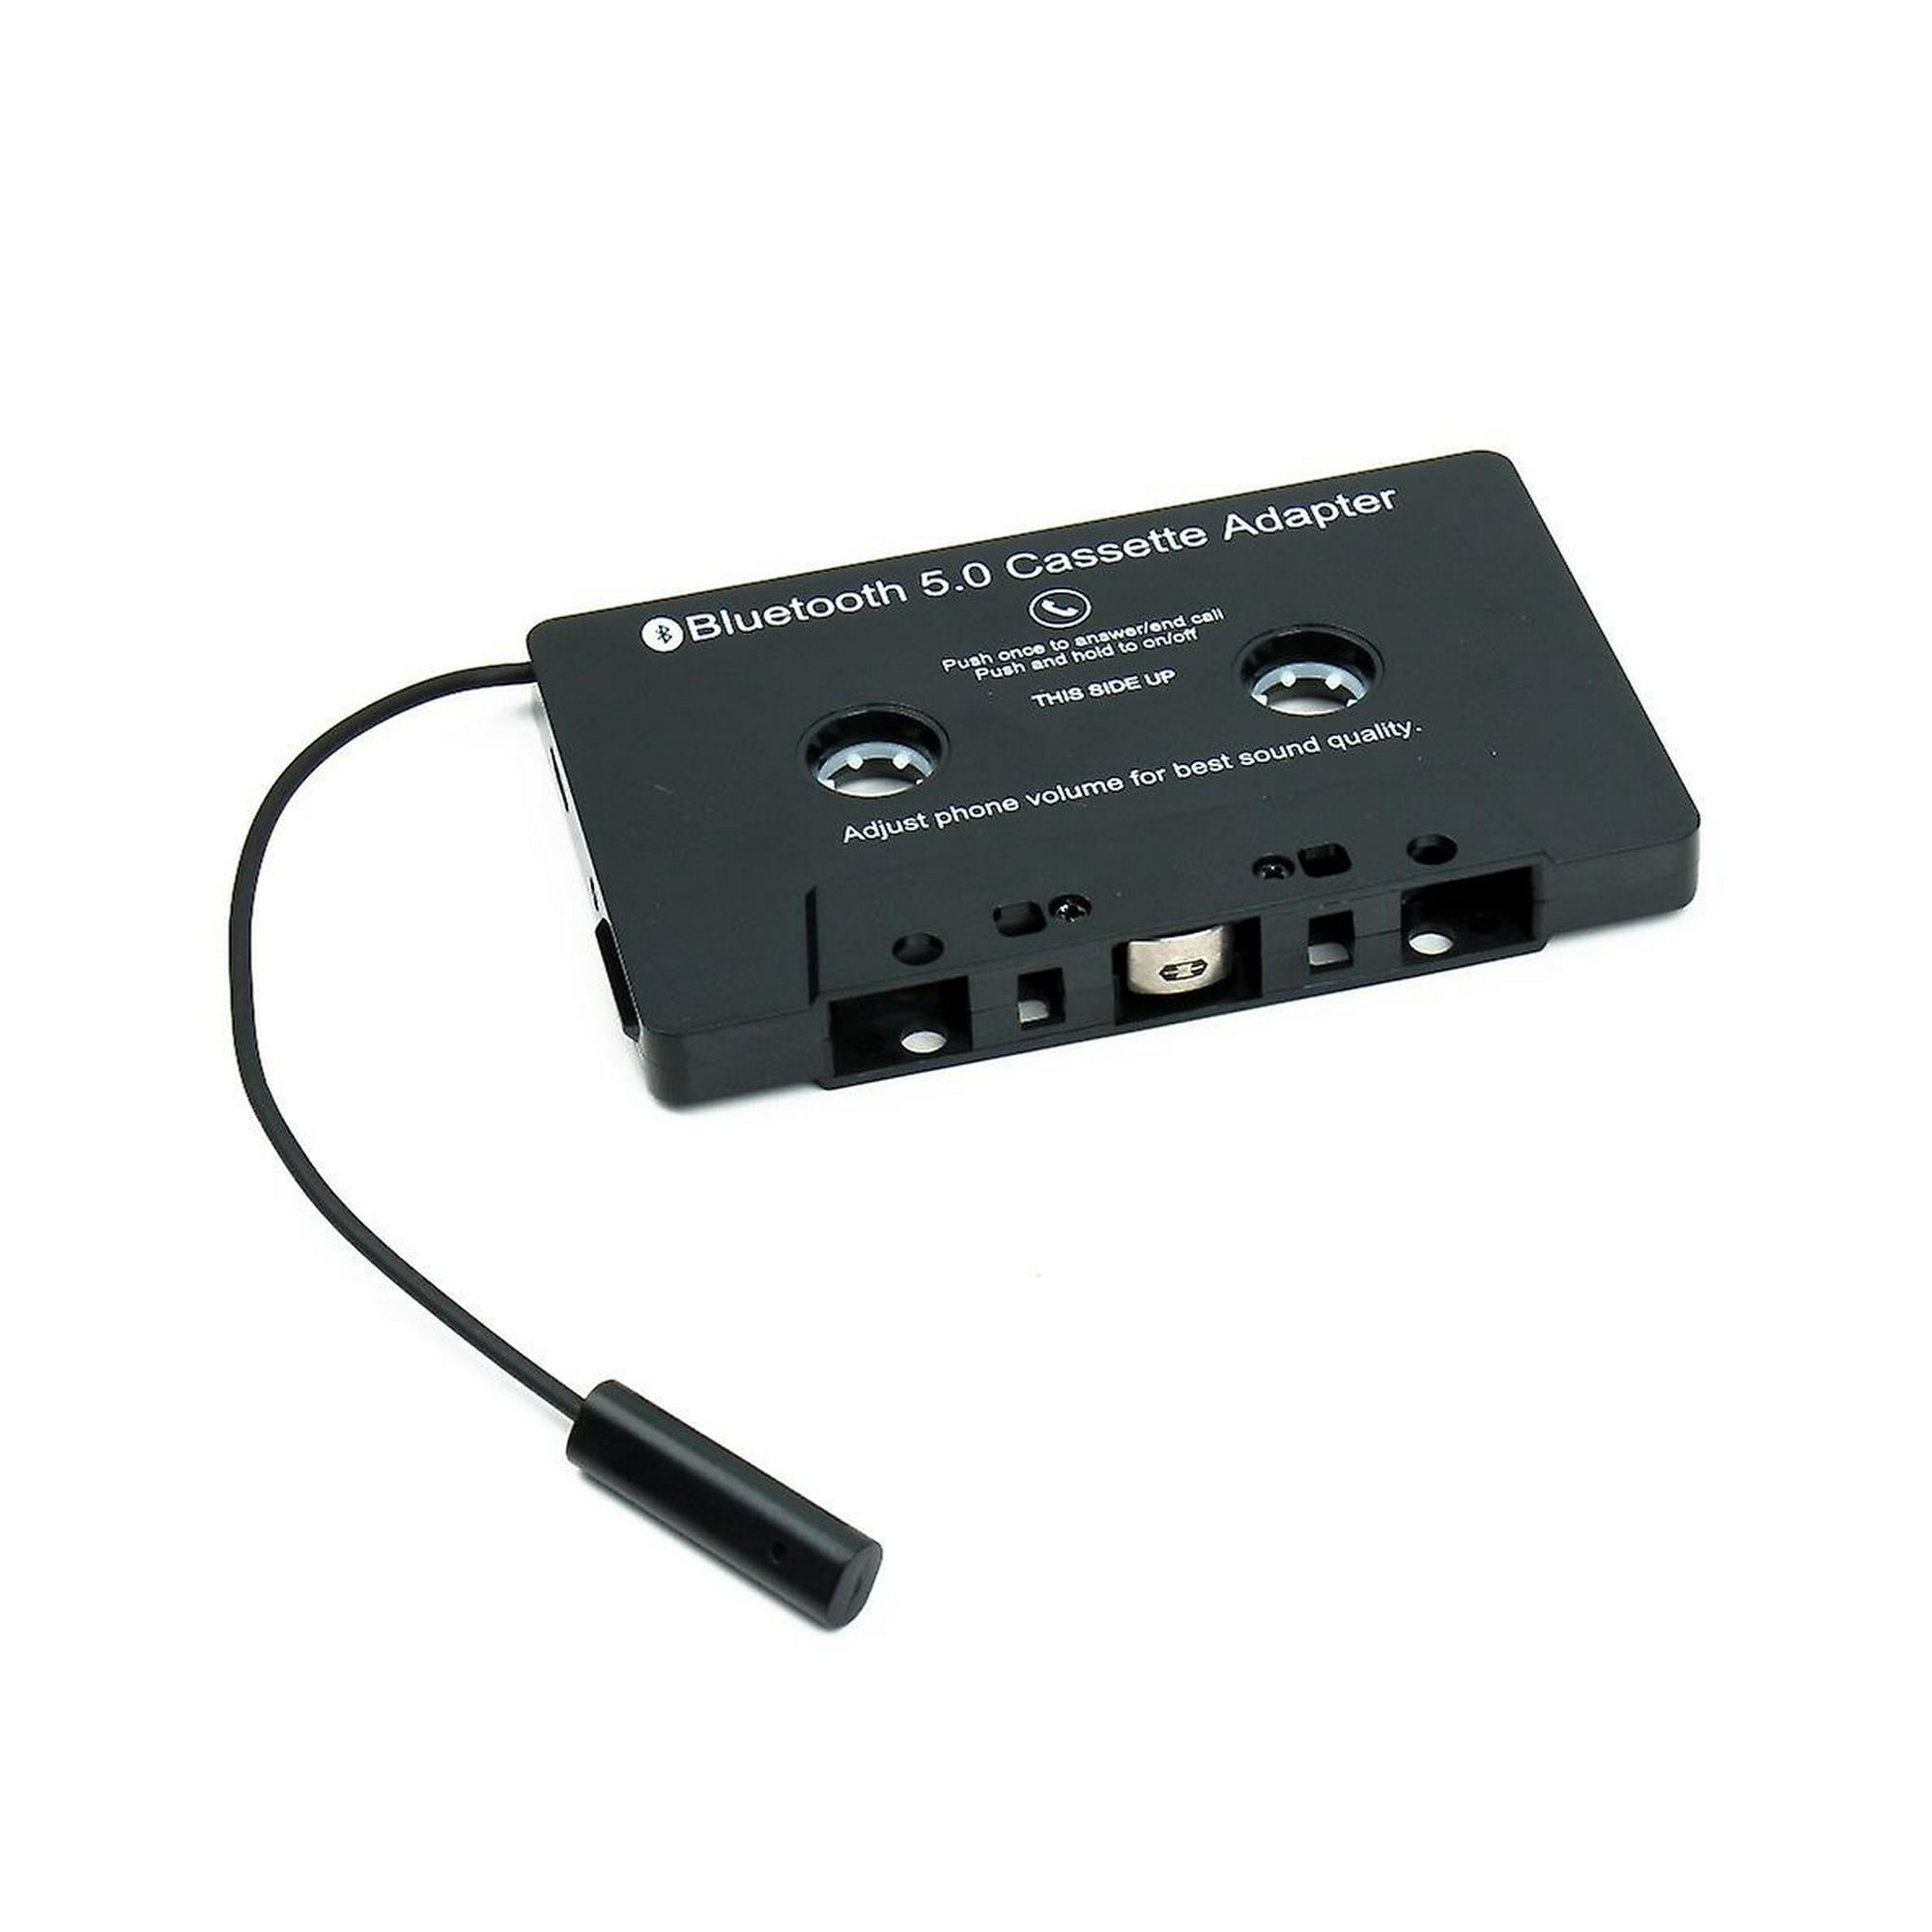 Audio del coche Bluetooth Cassette Receptor Reproductor de cinta Bluetooth  5.0 Cassette Aux Adapter Negro - Snngv